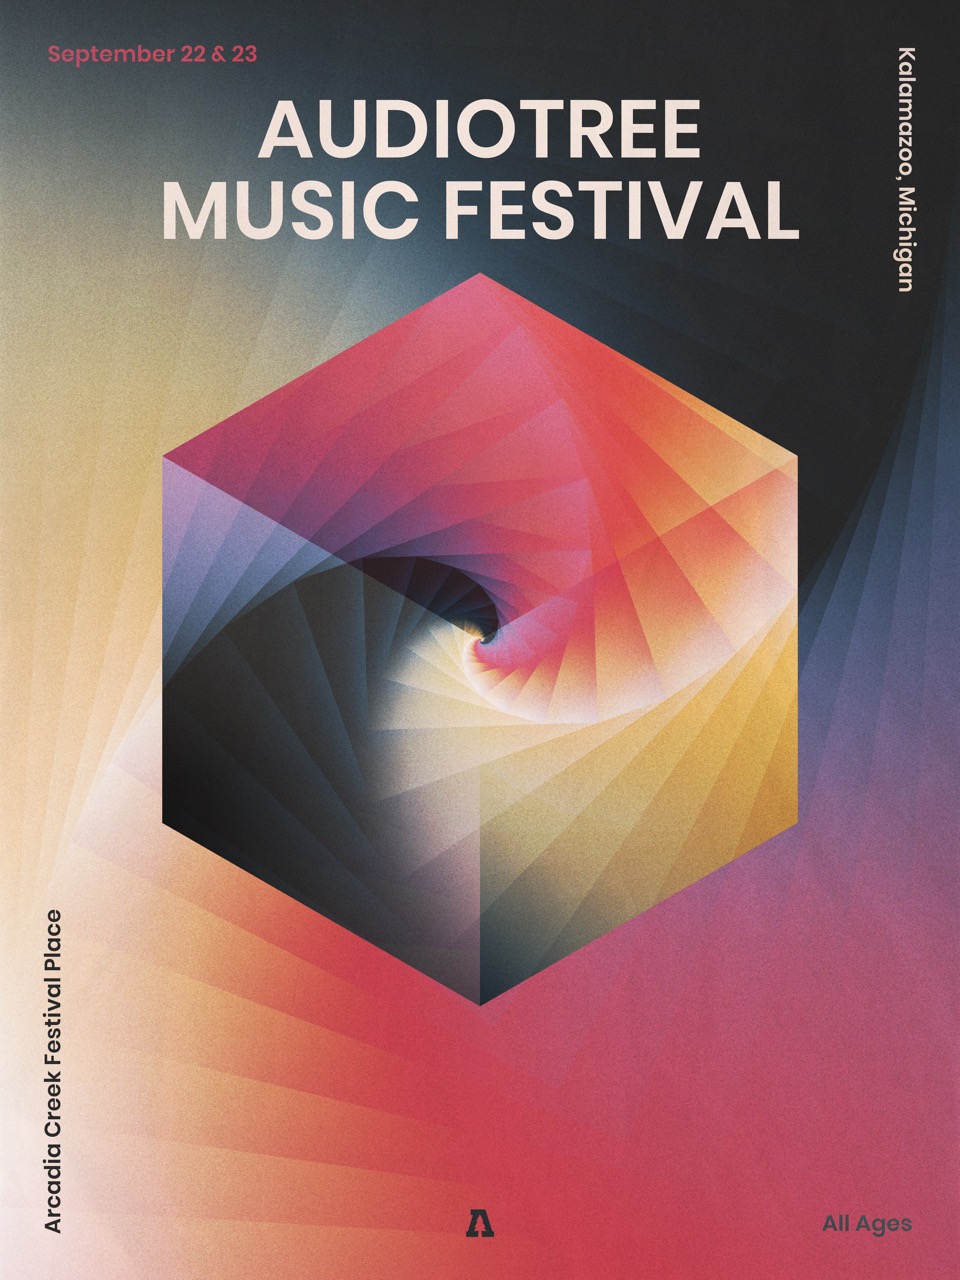   Audiotree Music Festival 2018  Art Direction 